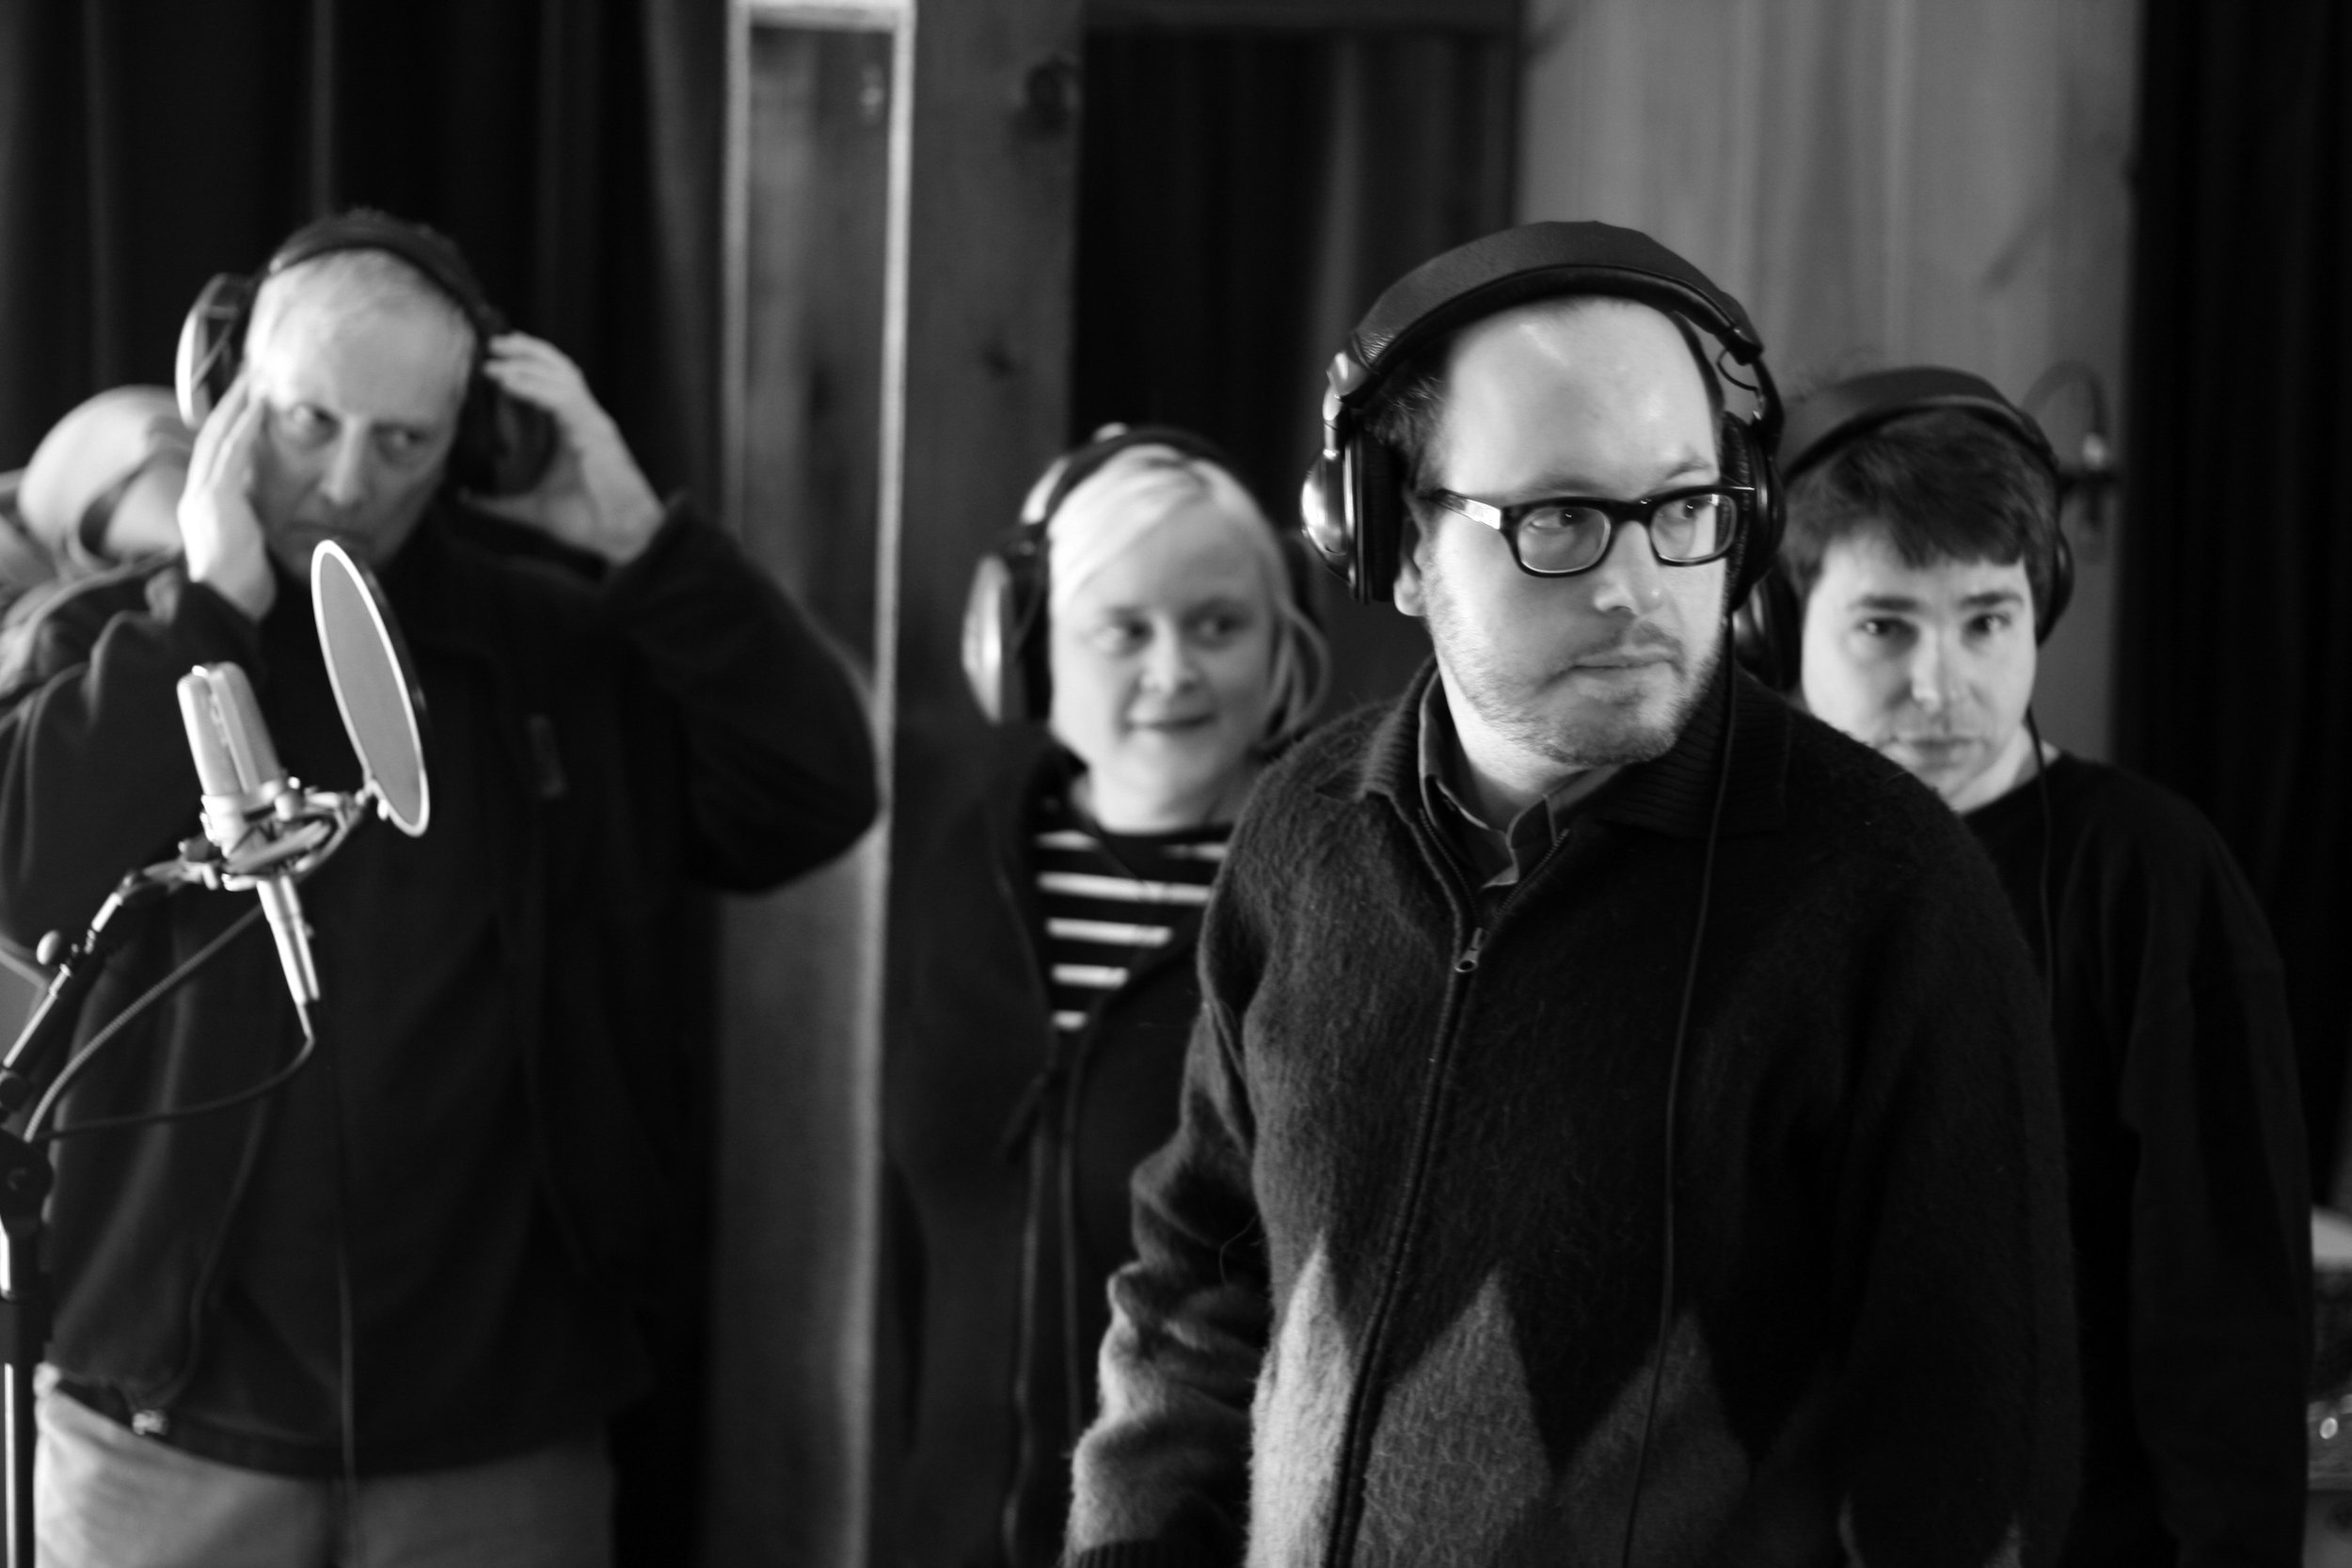   Doug Yule , “ Orange   Nichole” Ferree ,  Joel Mellin , &amp;  John Clarke  recording backing vocals for “Blue Eyes Brighton Bus Stop” at  Verdant Studios , 2008 